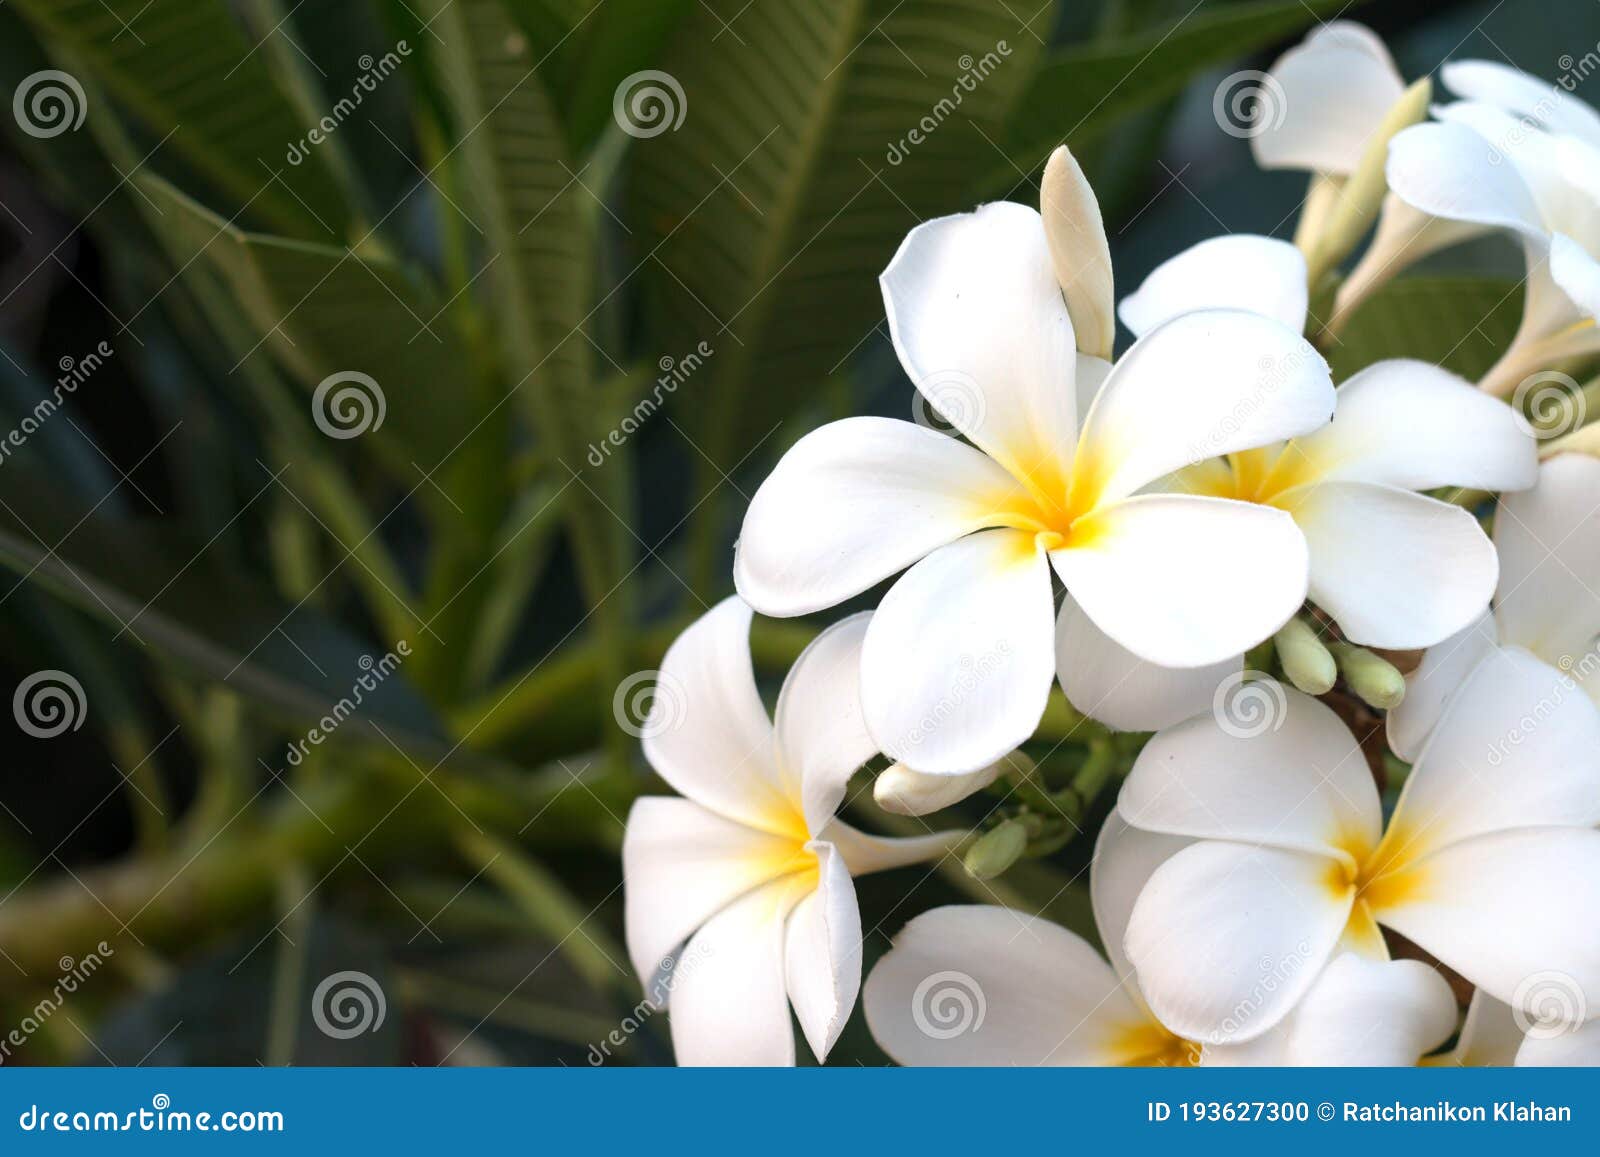 frangipani tropical spa flower. plumeria flower on plant